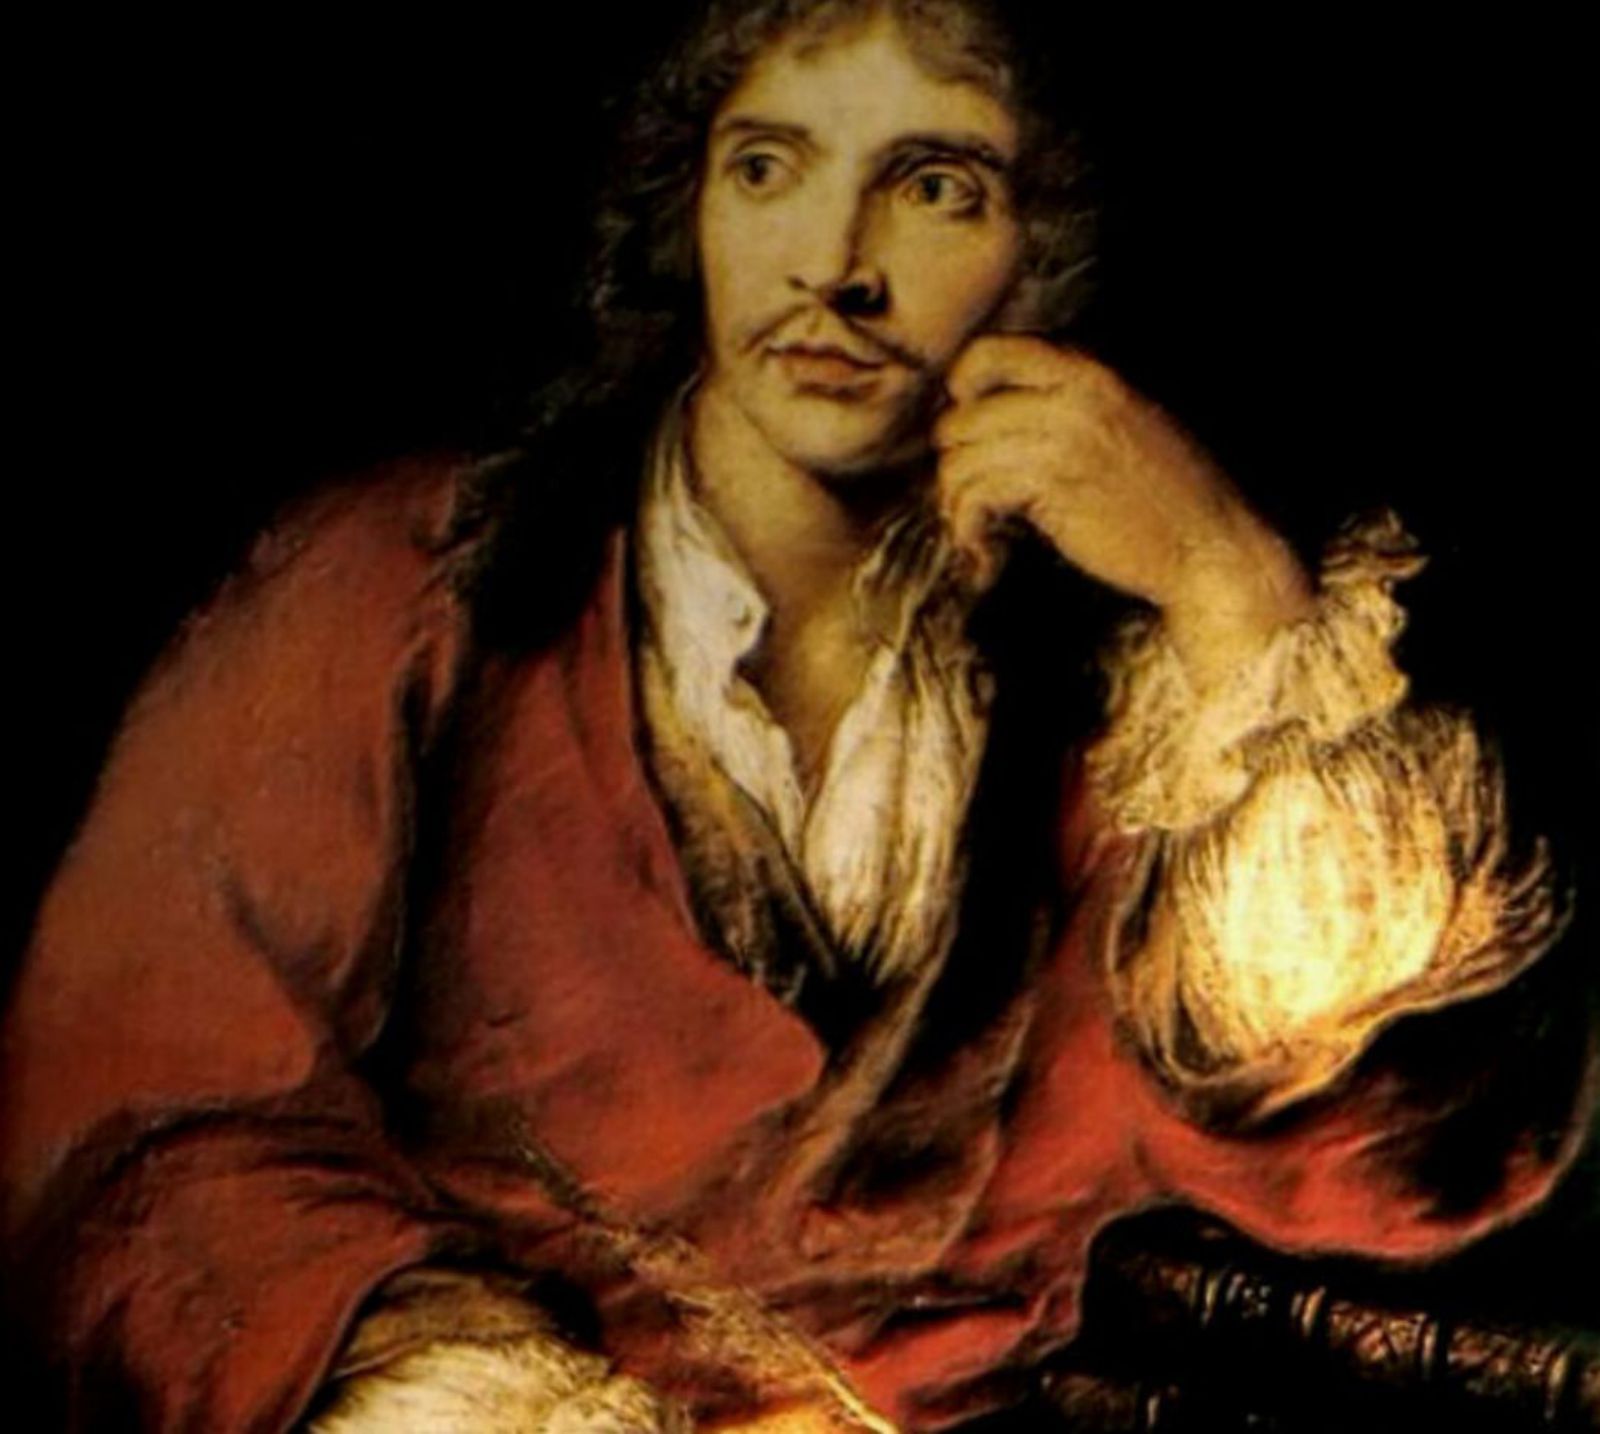 Retrato de Jean-Baptiste Poquelin, Molière (1622-1673).